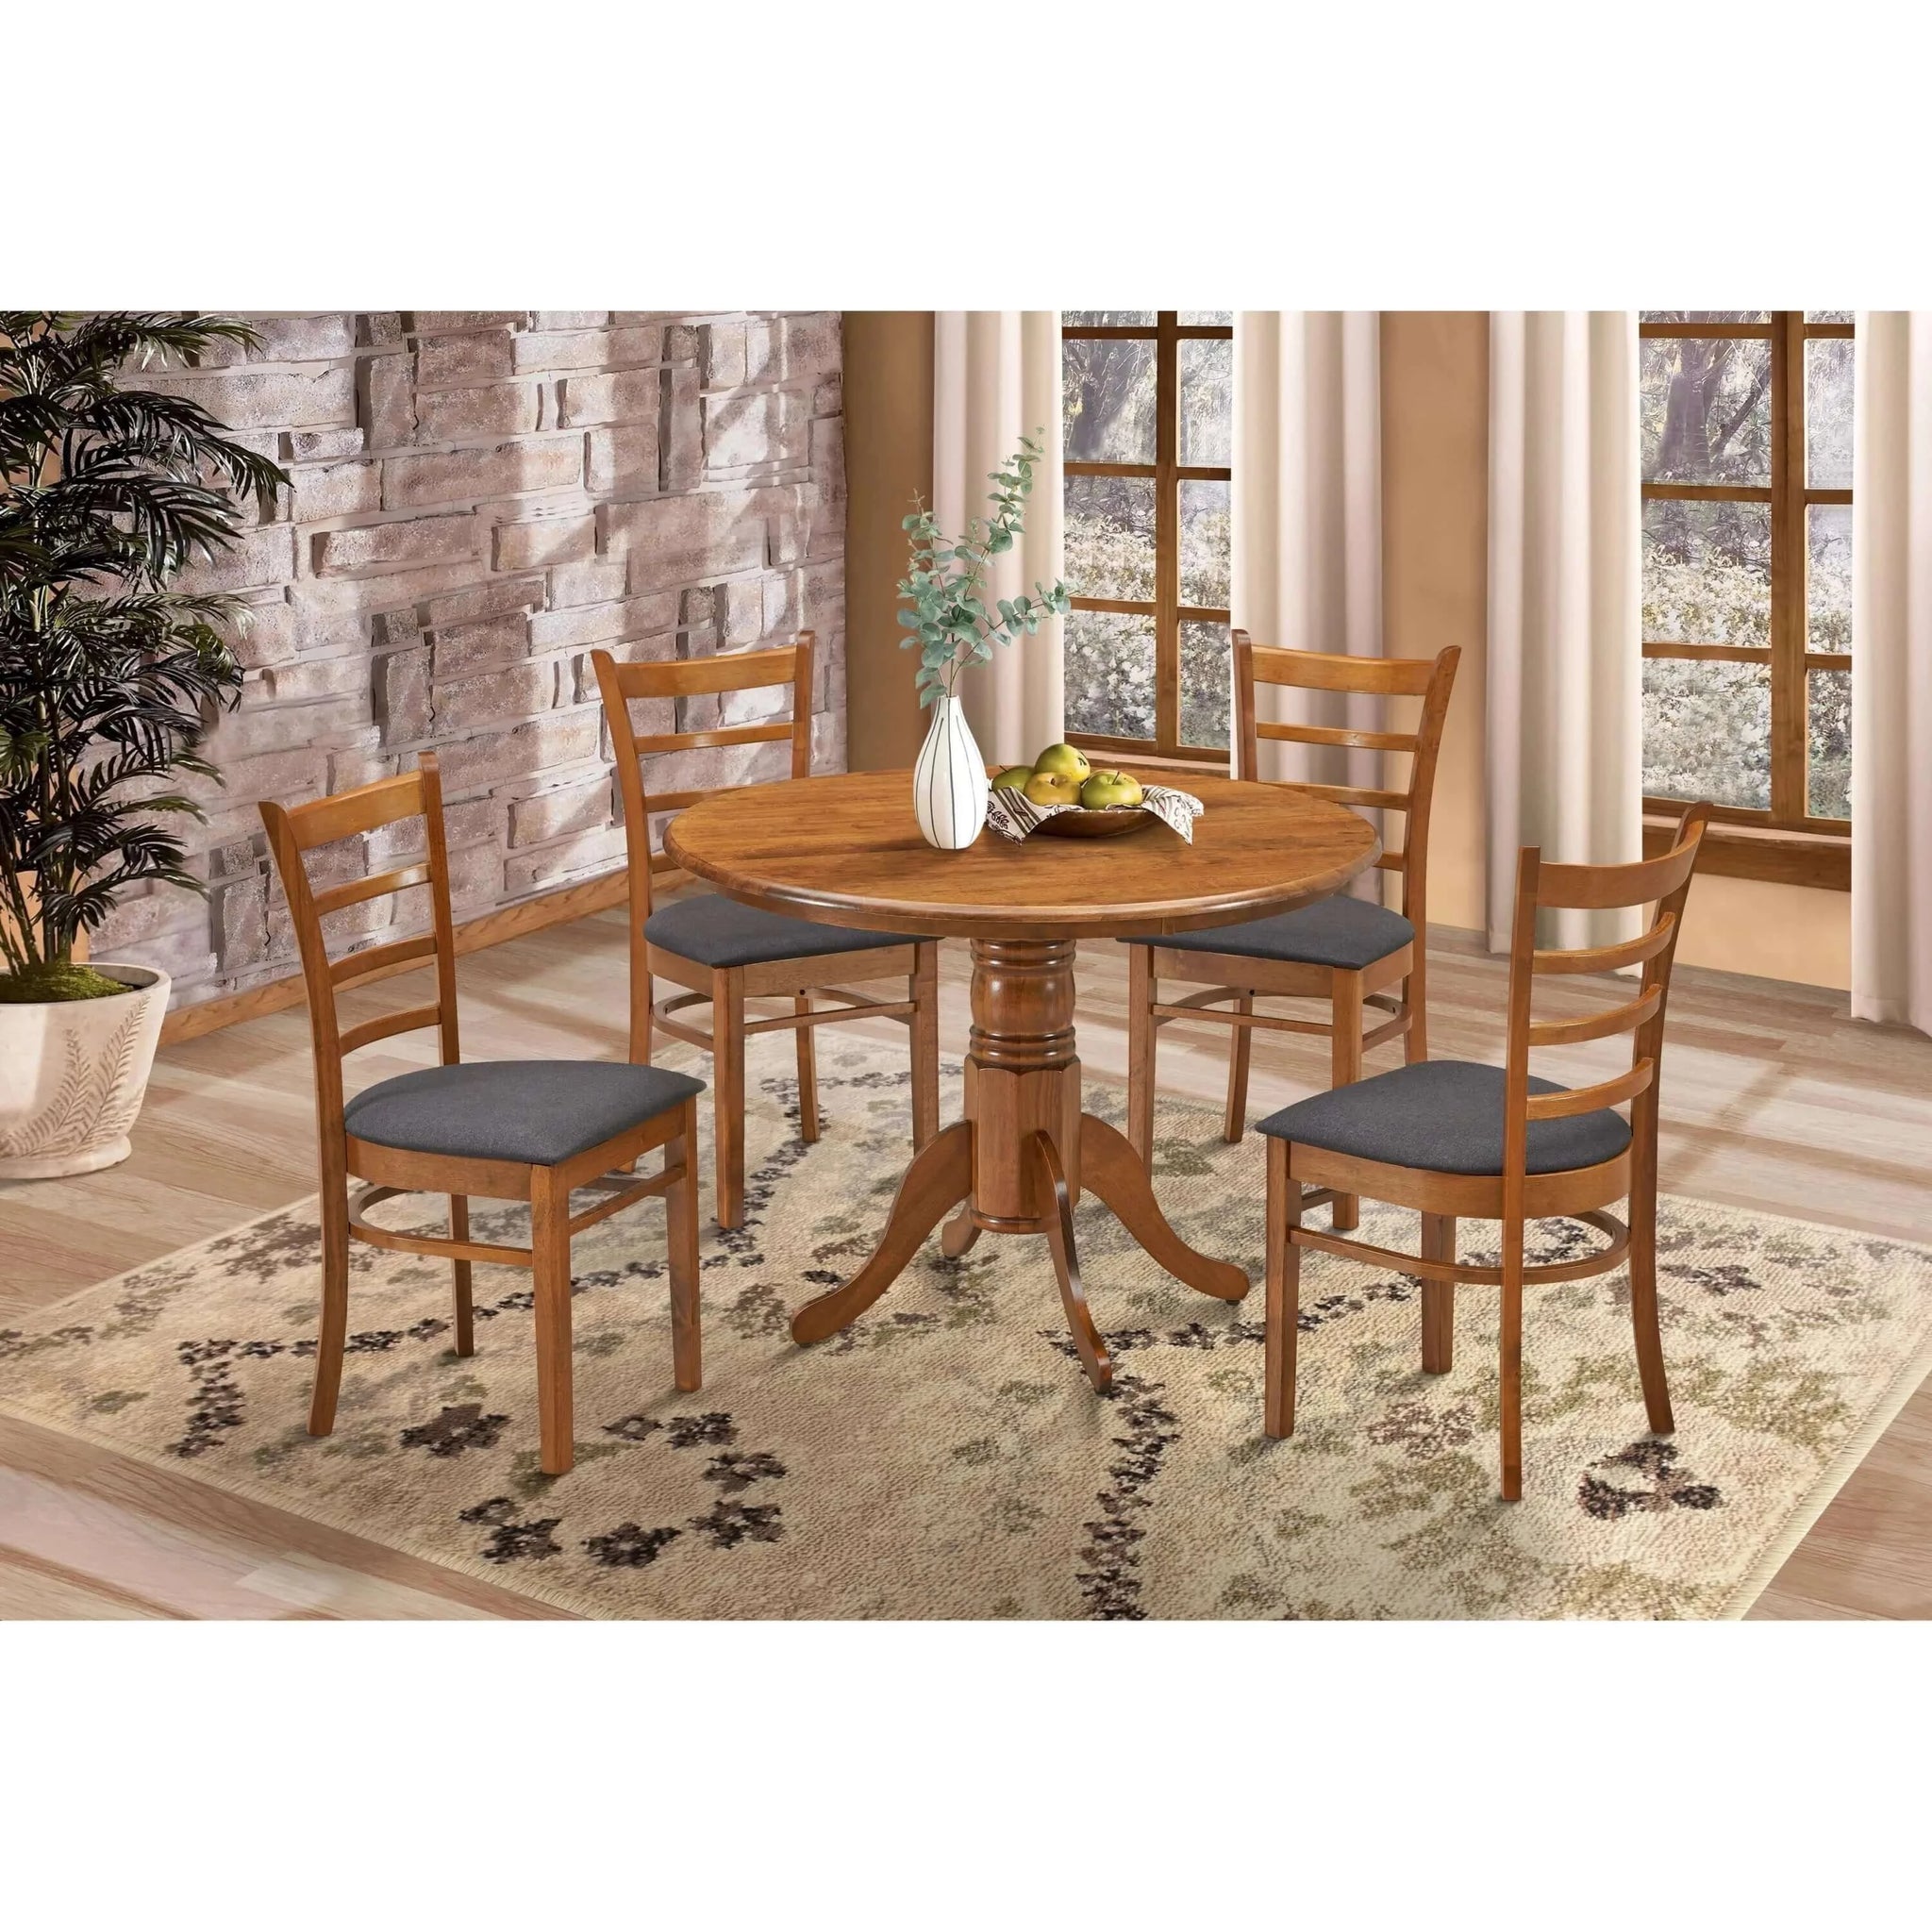 Buy linaria 5pc dining set 106cm round pedestral table 4 fabric seat chair - walnut - upinteriors-Upinteriors